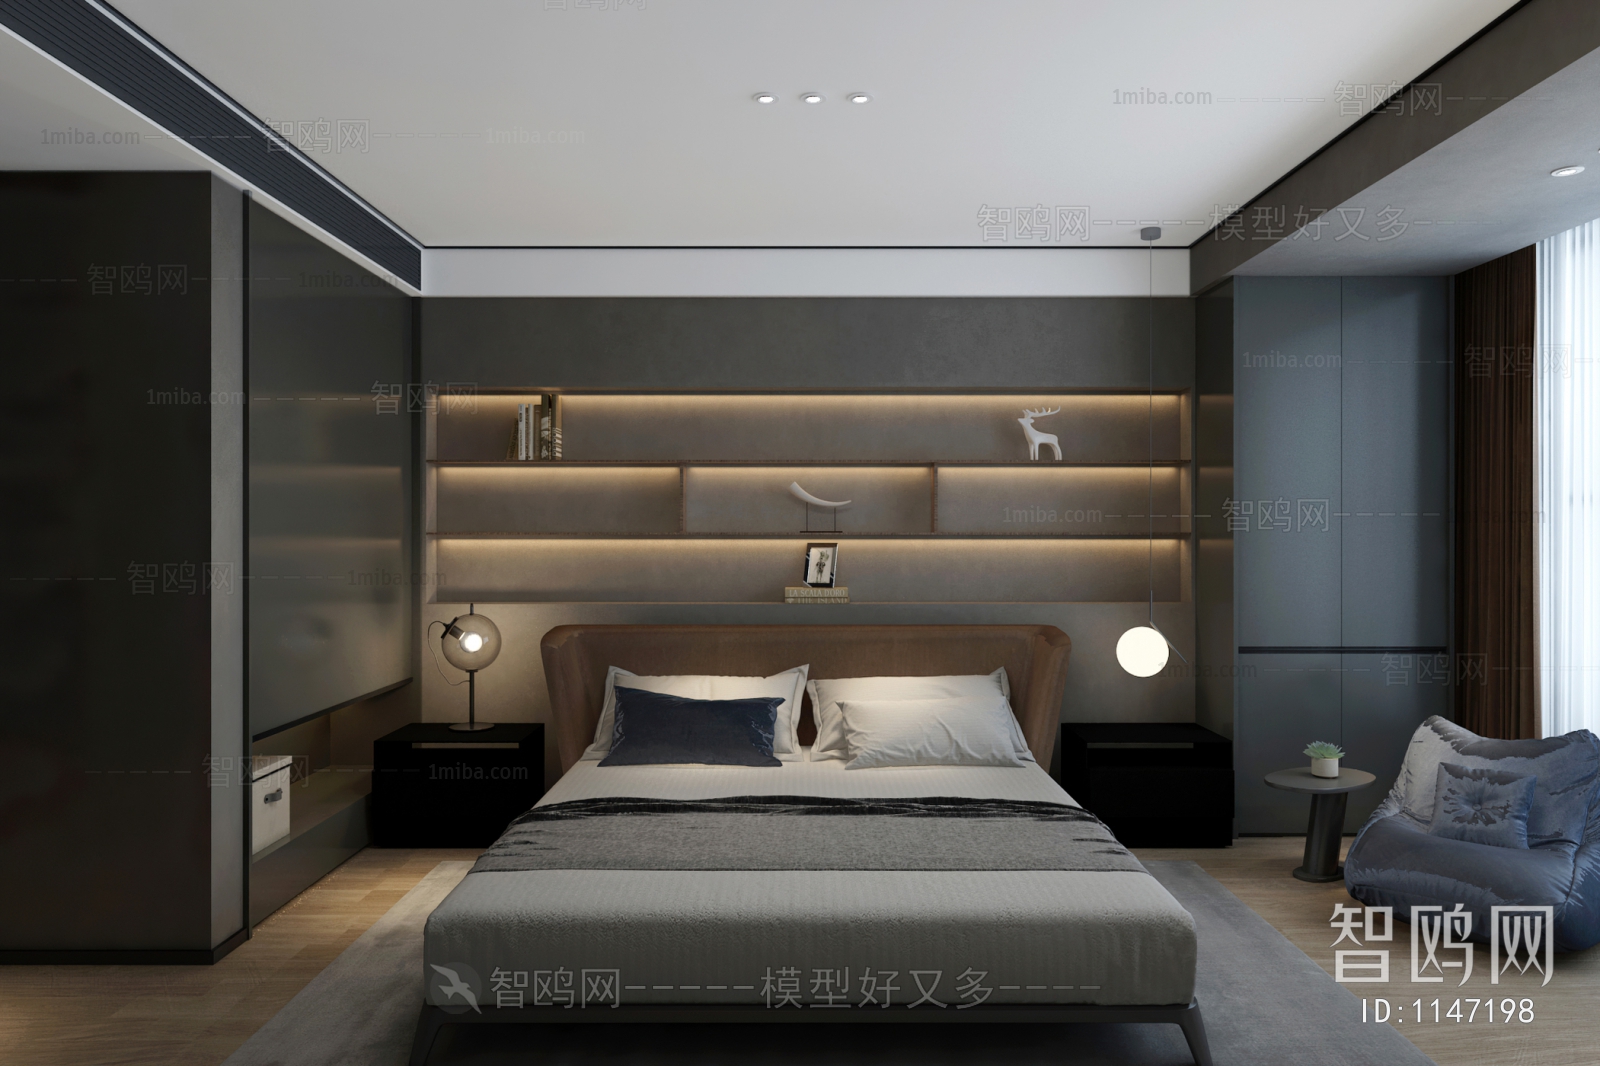 Industrial Style Bedroom